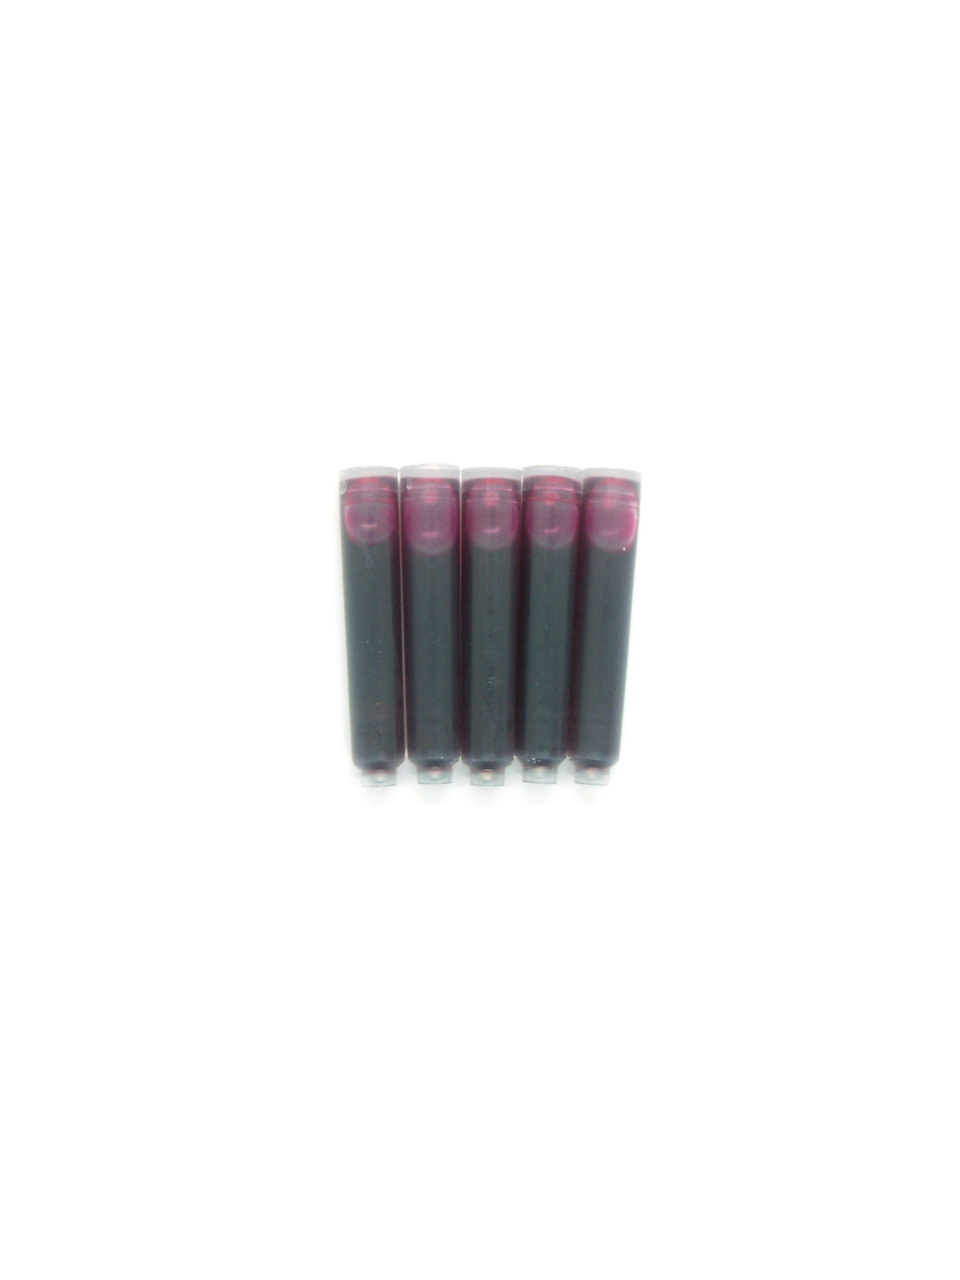 PenConverter Ink Cartridges For Yard O Led Fountain Pens (Pink)